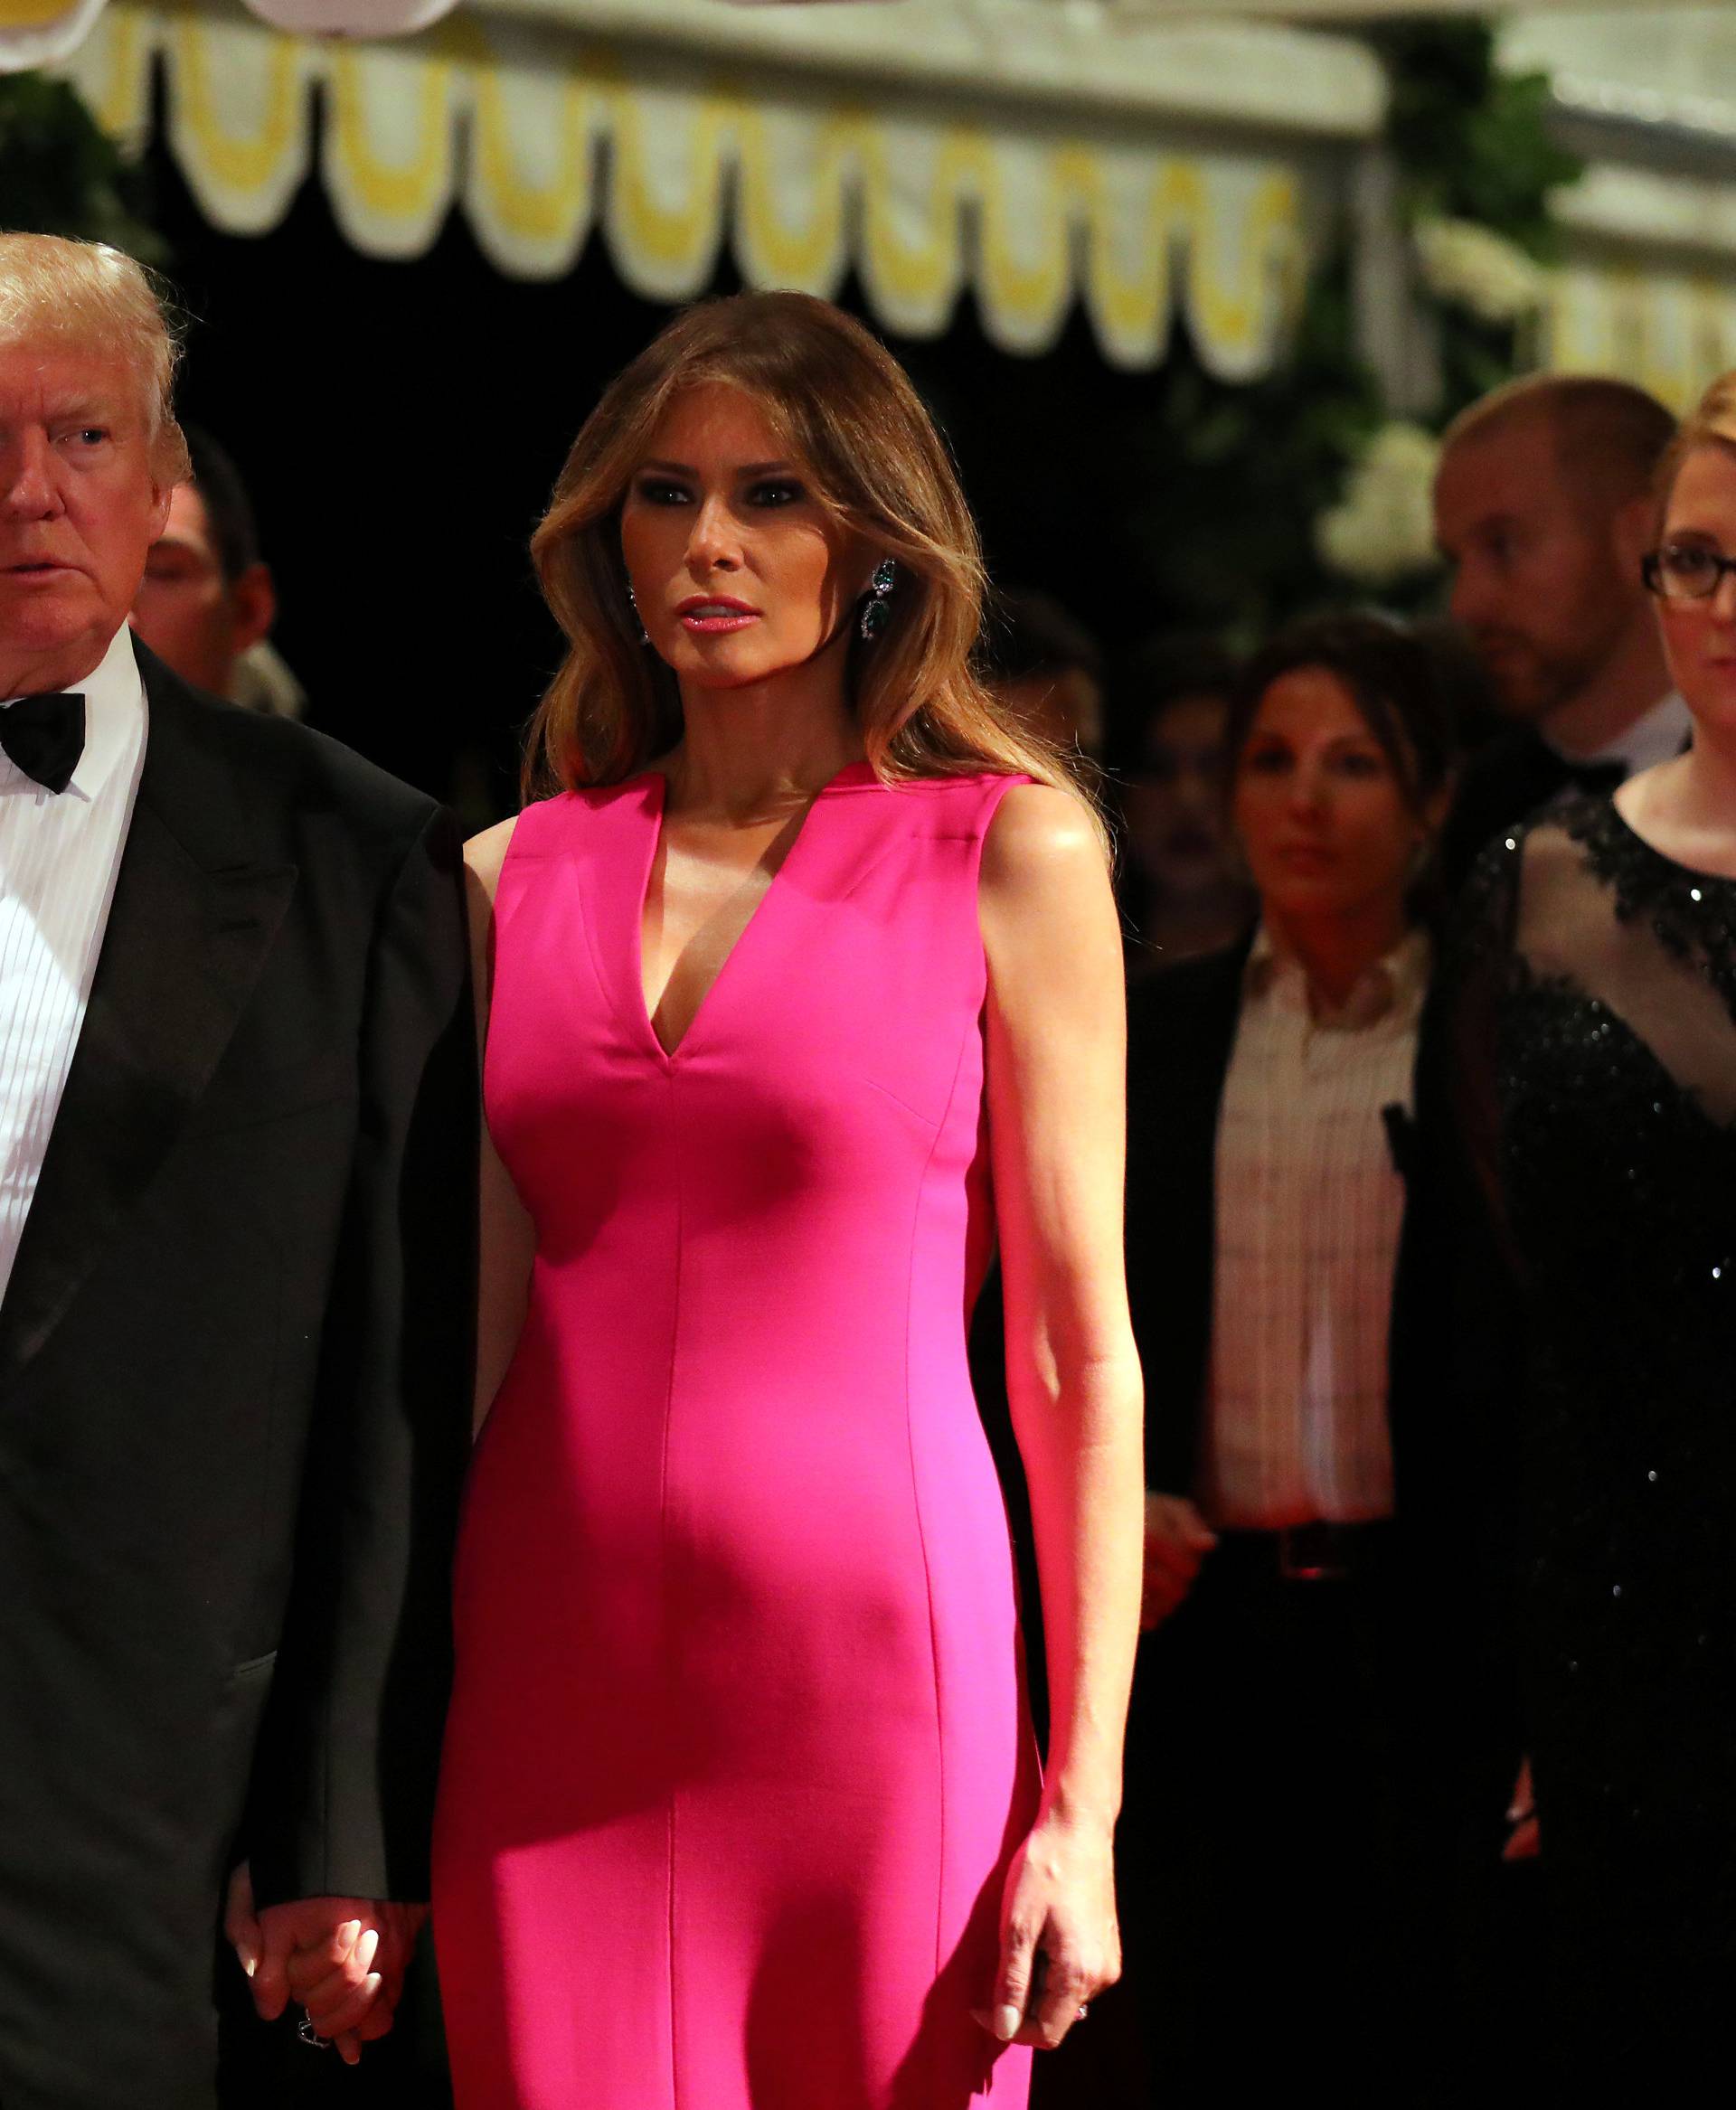 U.S. President Donald Trump and First Lady Melania Trump attend the 60th Annual Red Cross Gala at Mar-a-Lago club in Palm Beach, Florida, U.S